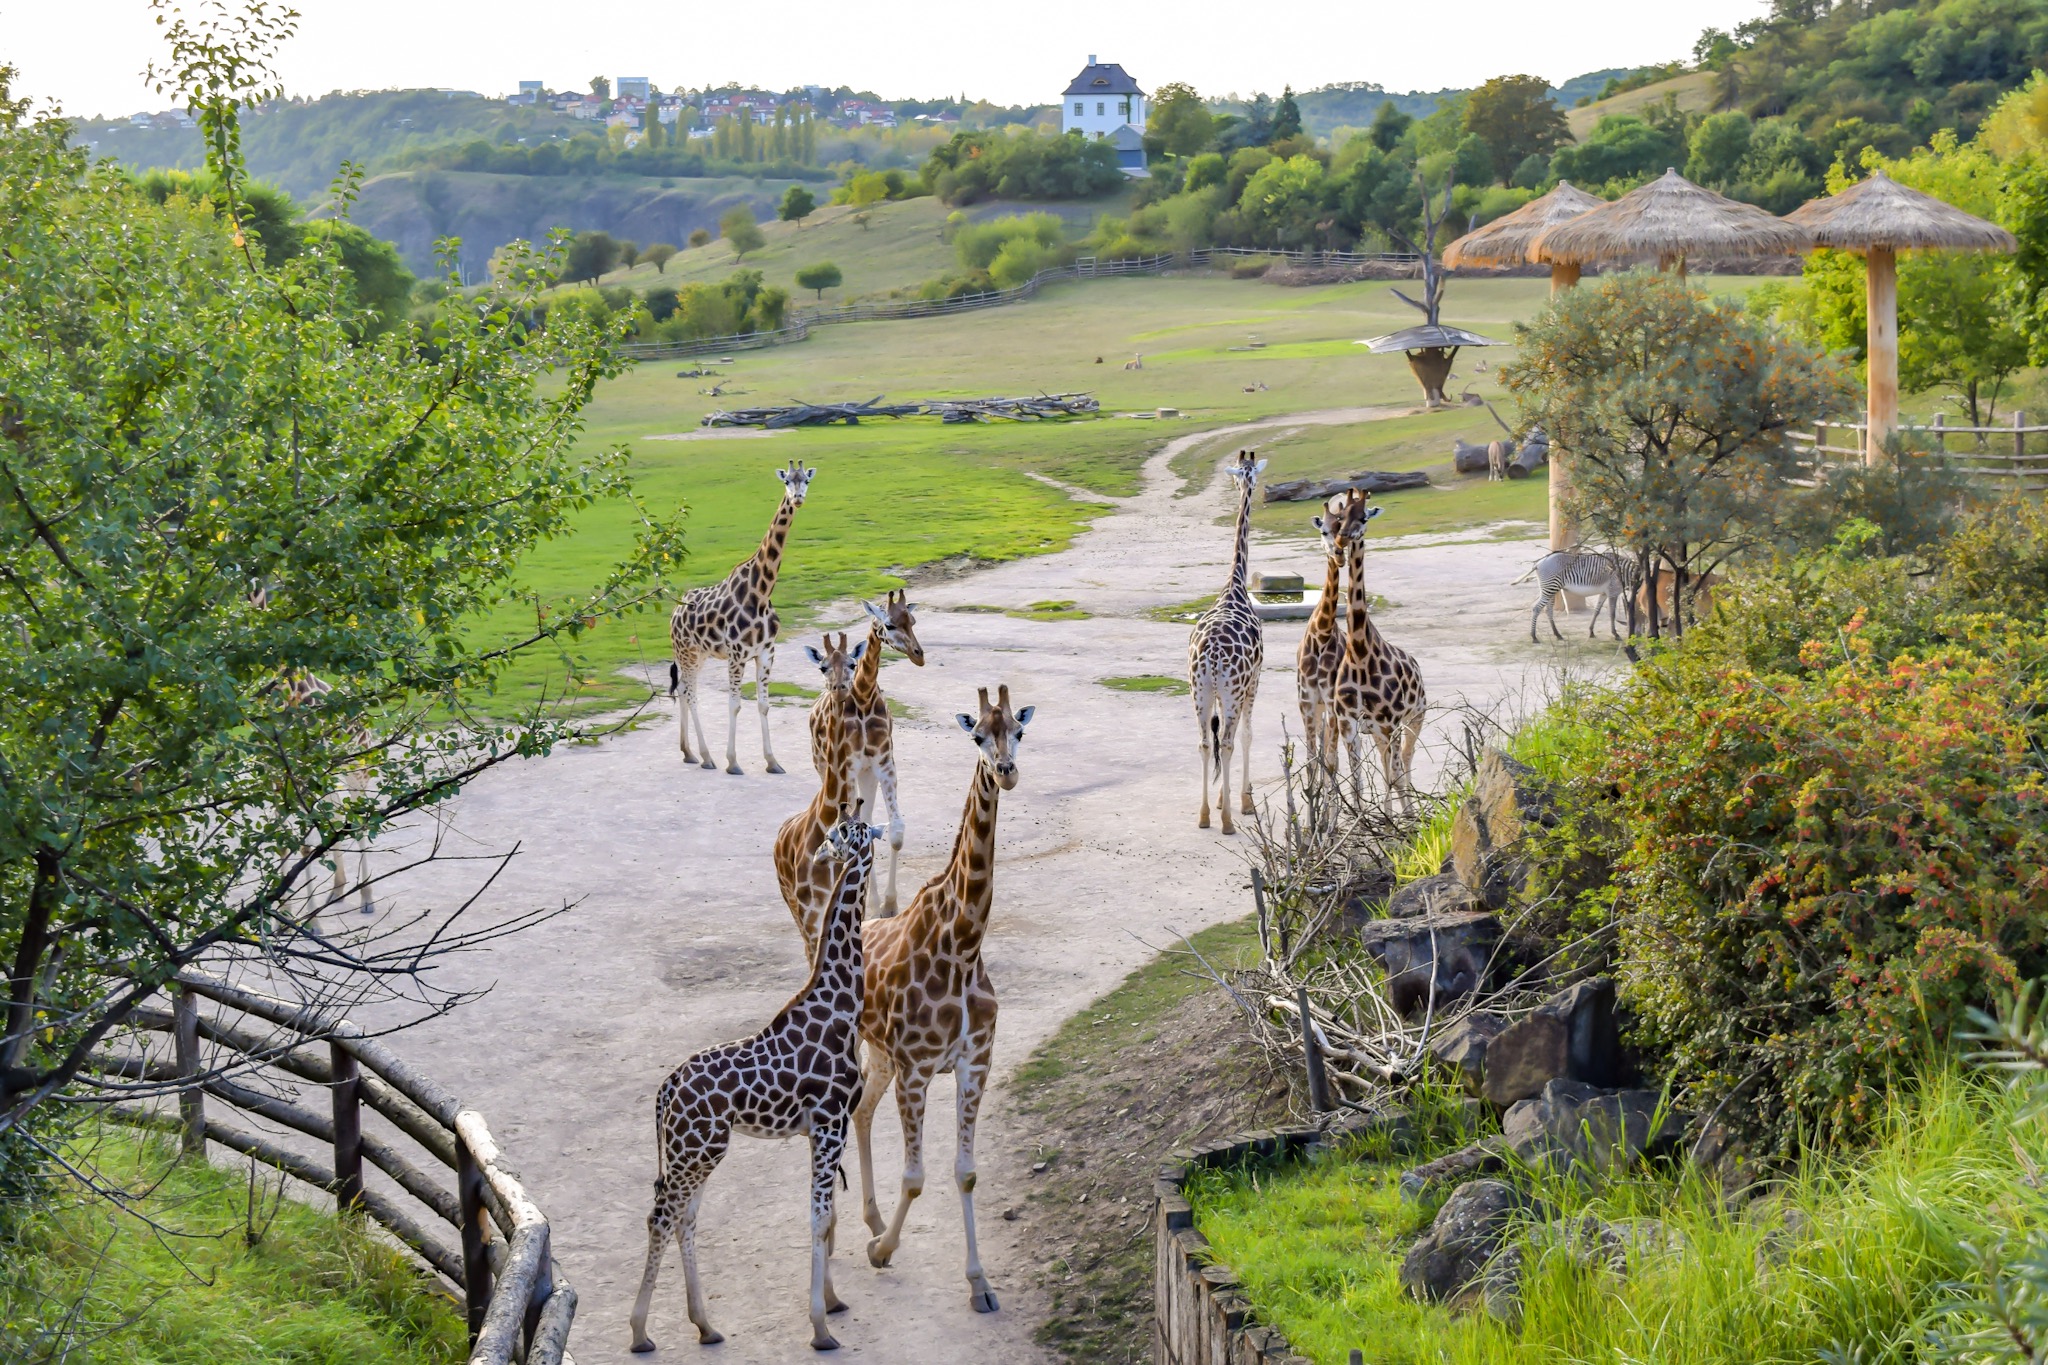 Giraffes at Prague Zoo